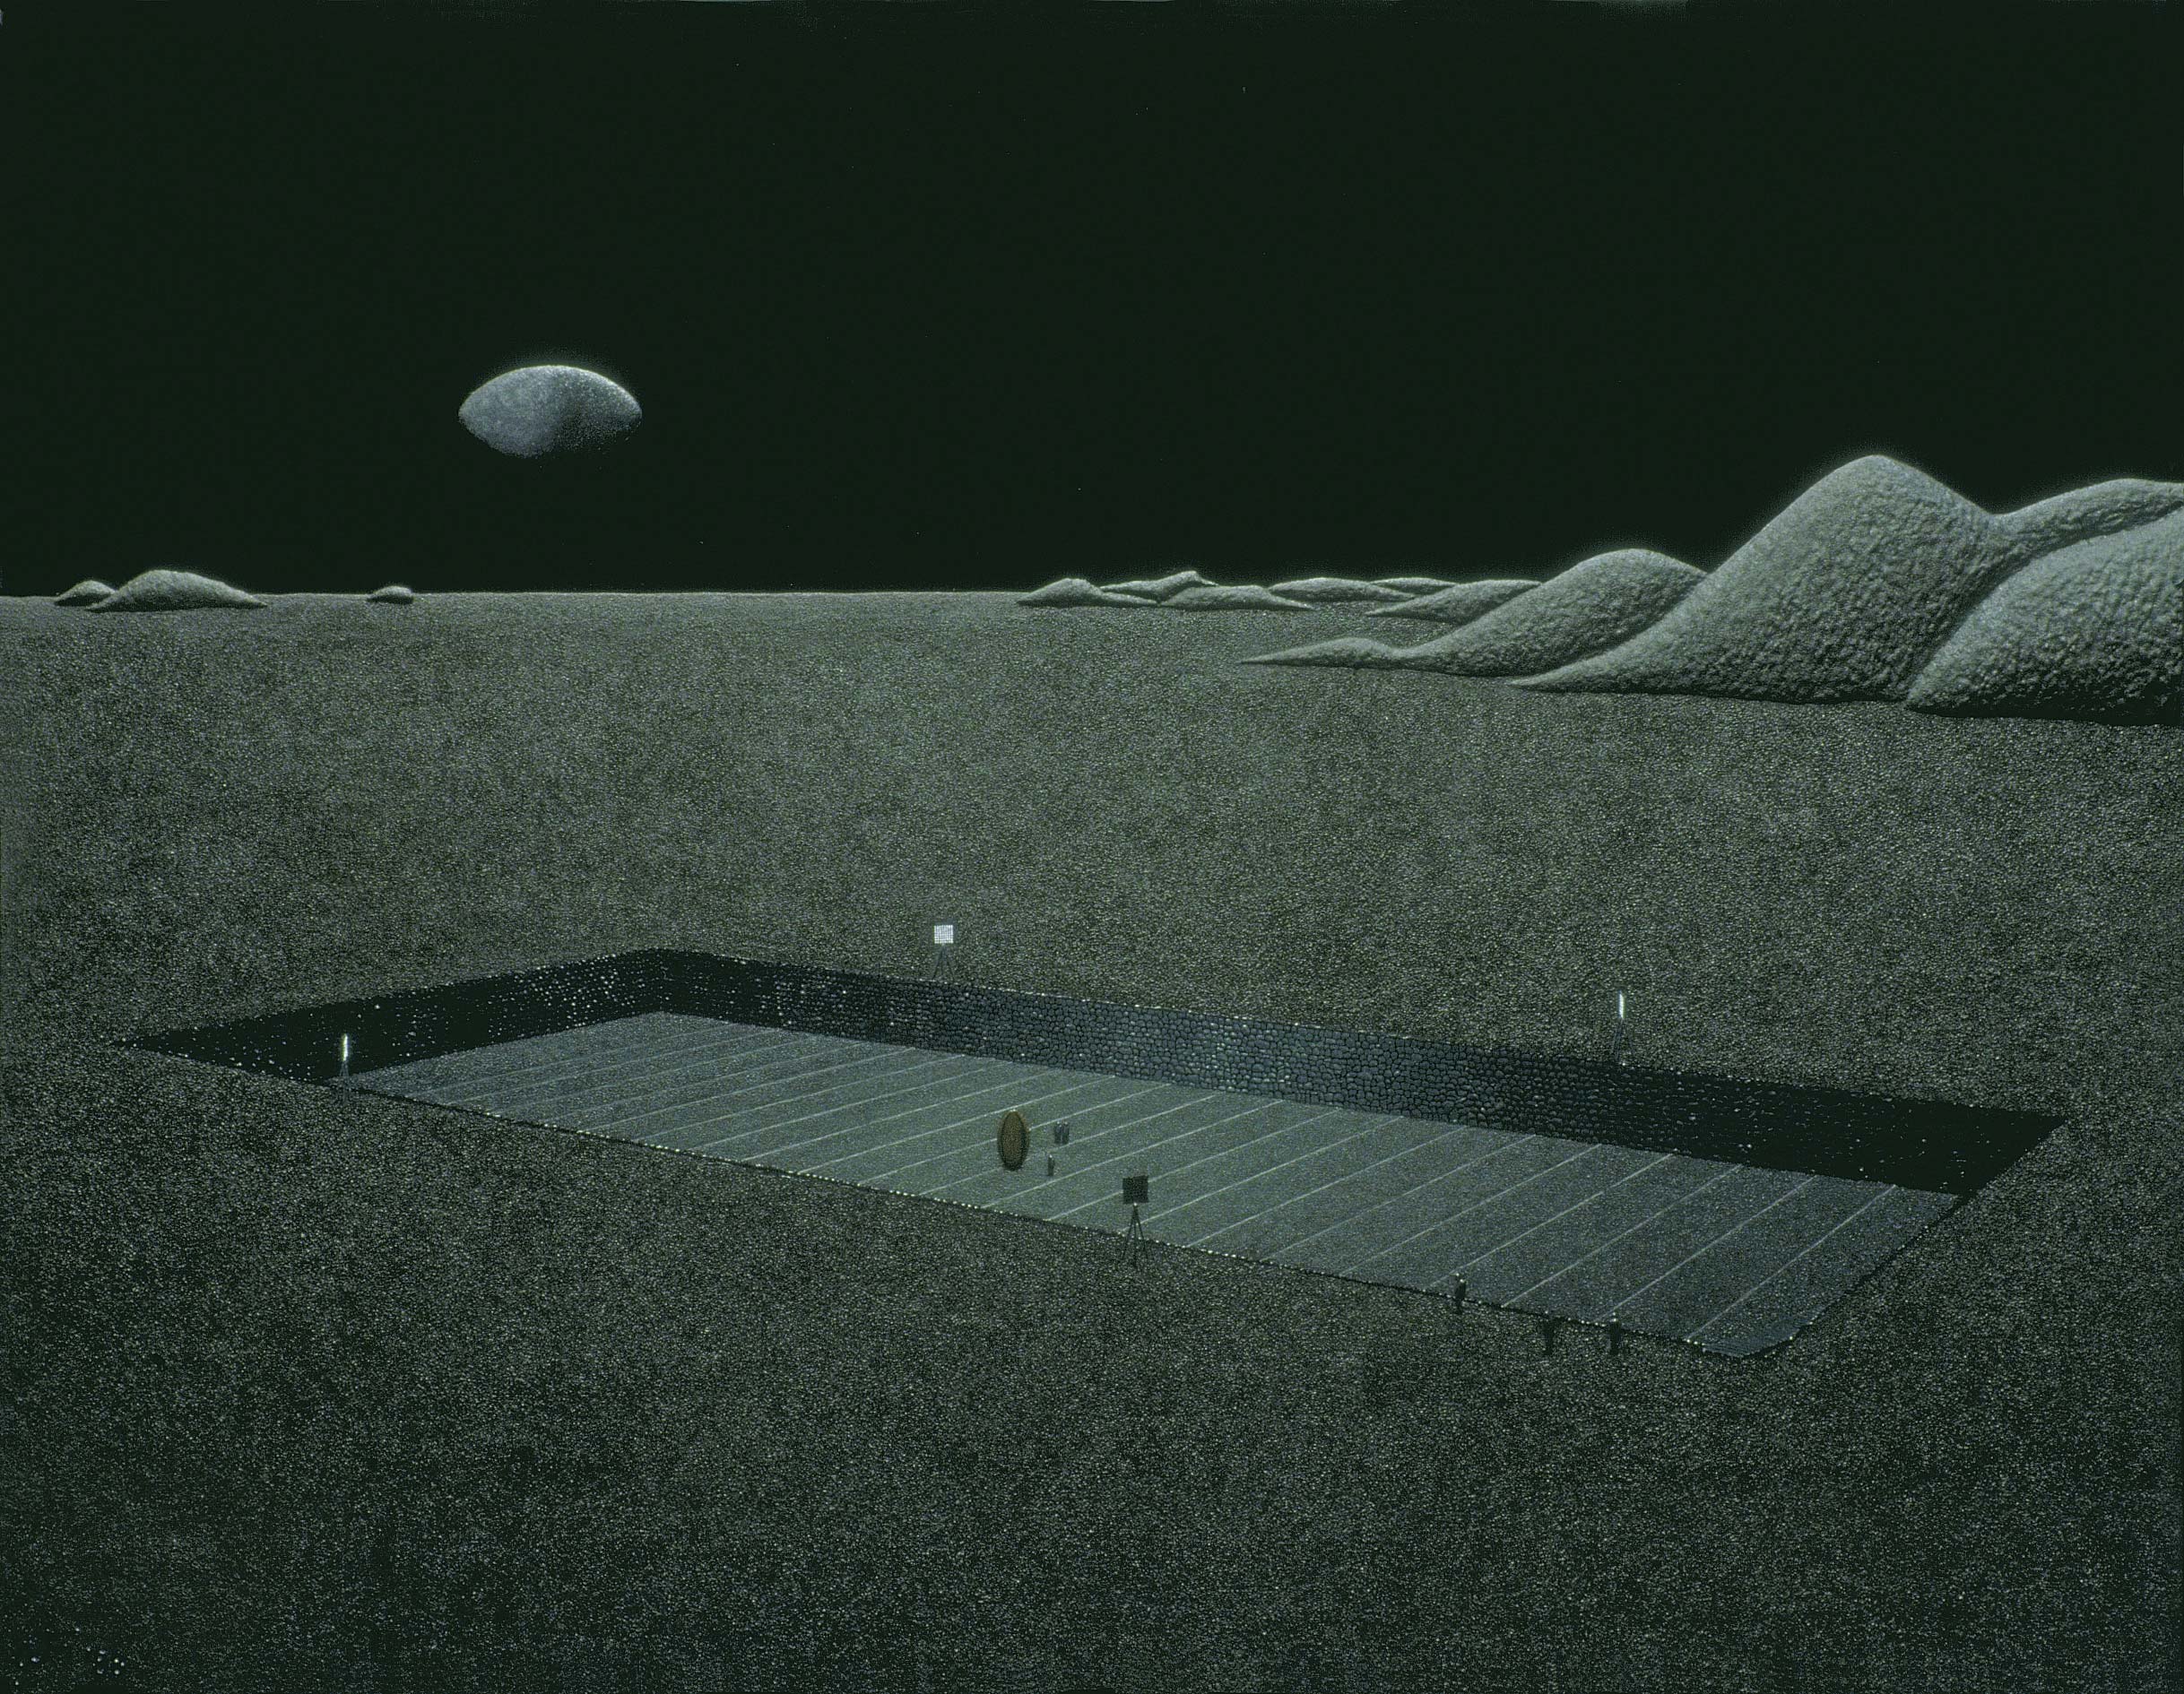 A giant football set in a sunken football field, a moon shaped like a football in the night sky